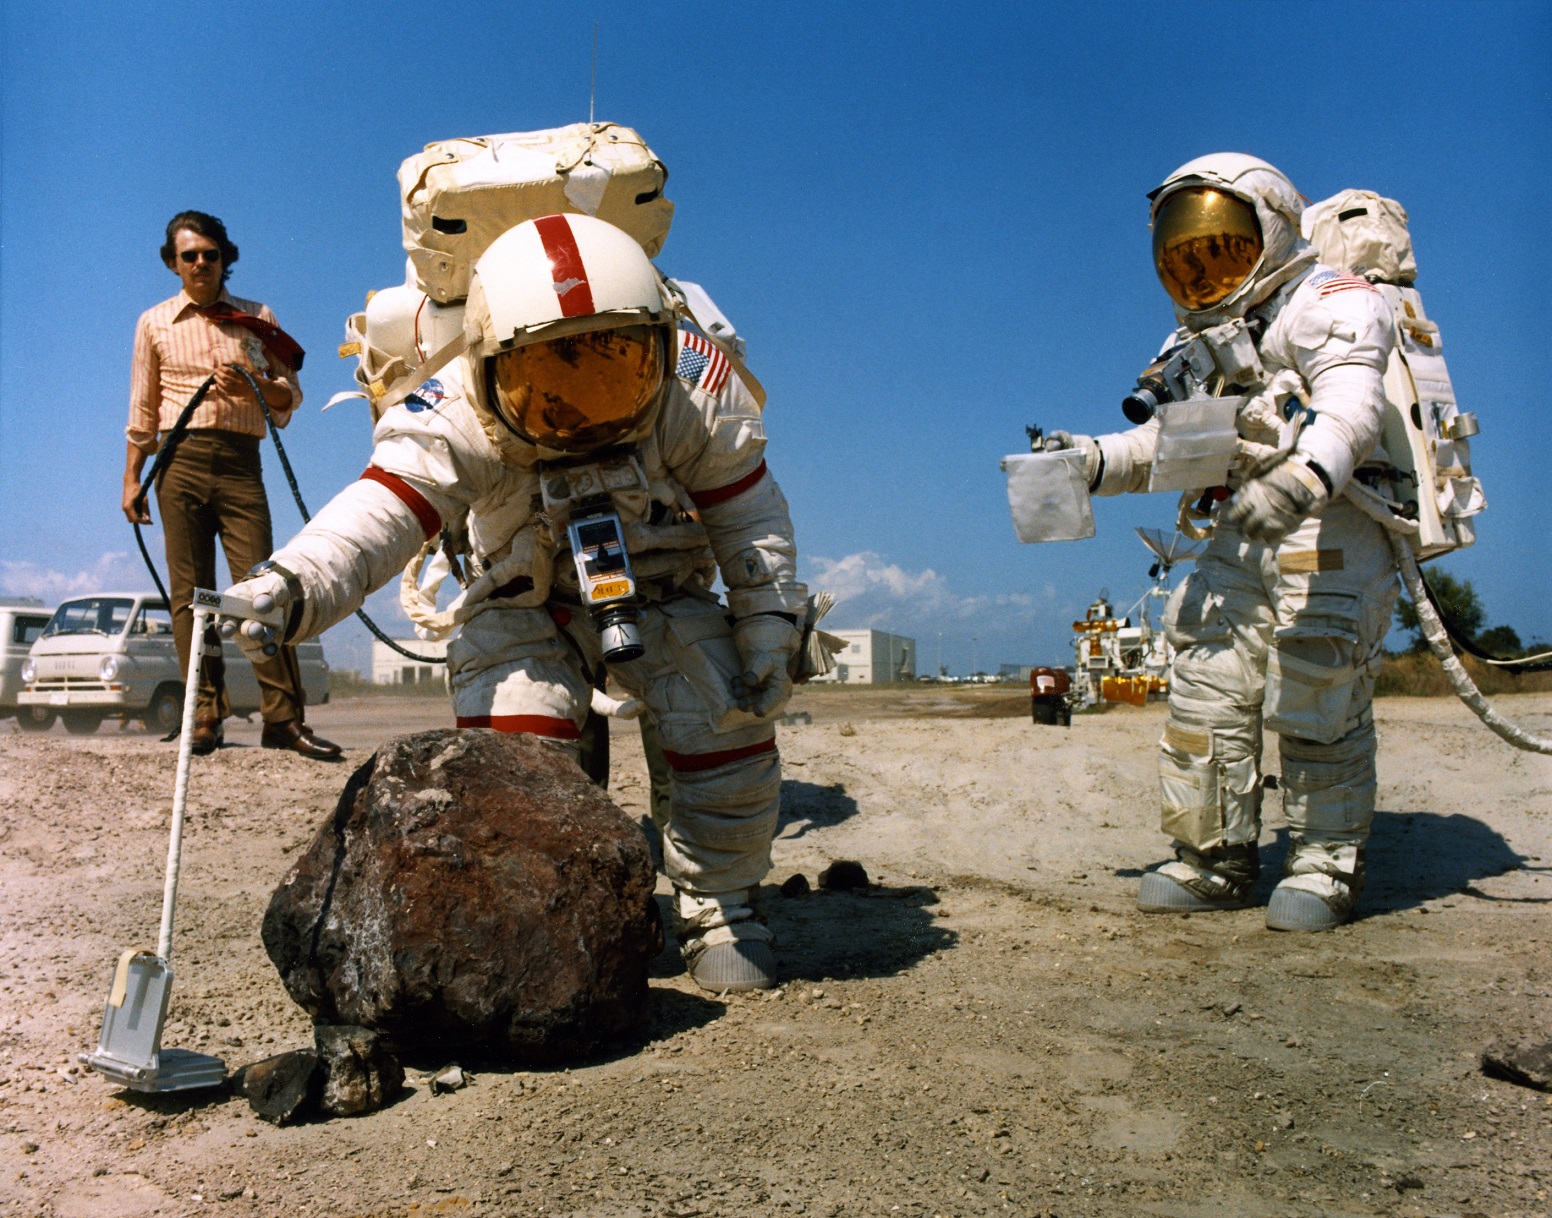 На луне можно жить. Миссия Аполлон 11. Скафандр Аполлон 11. Астронавты миссии Аполлон. Тренировки астронавтов Аполлон.